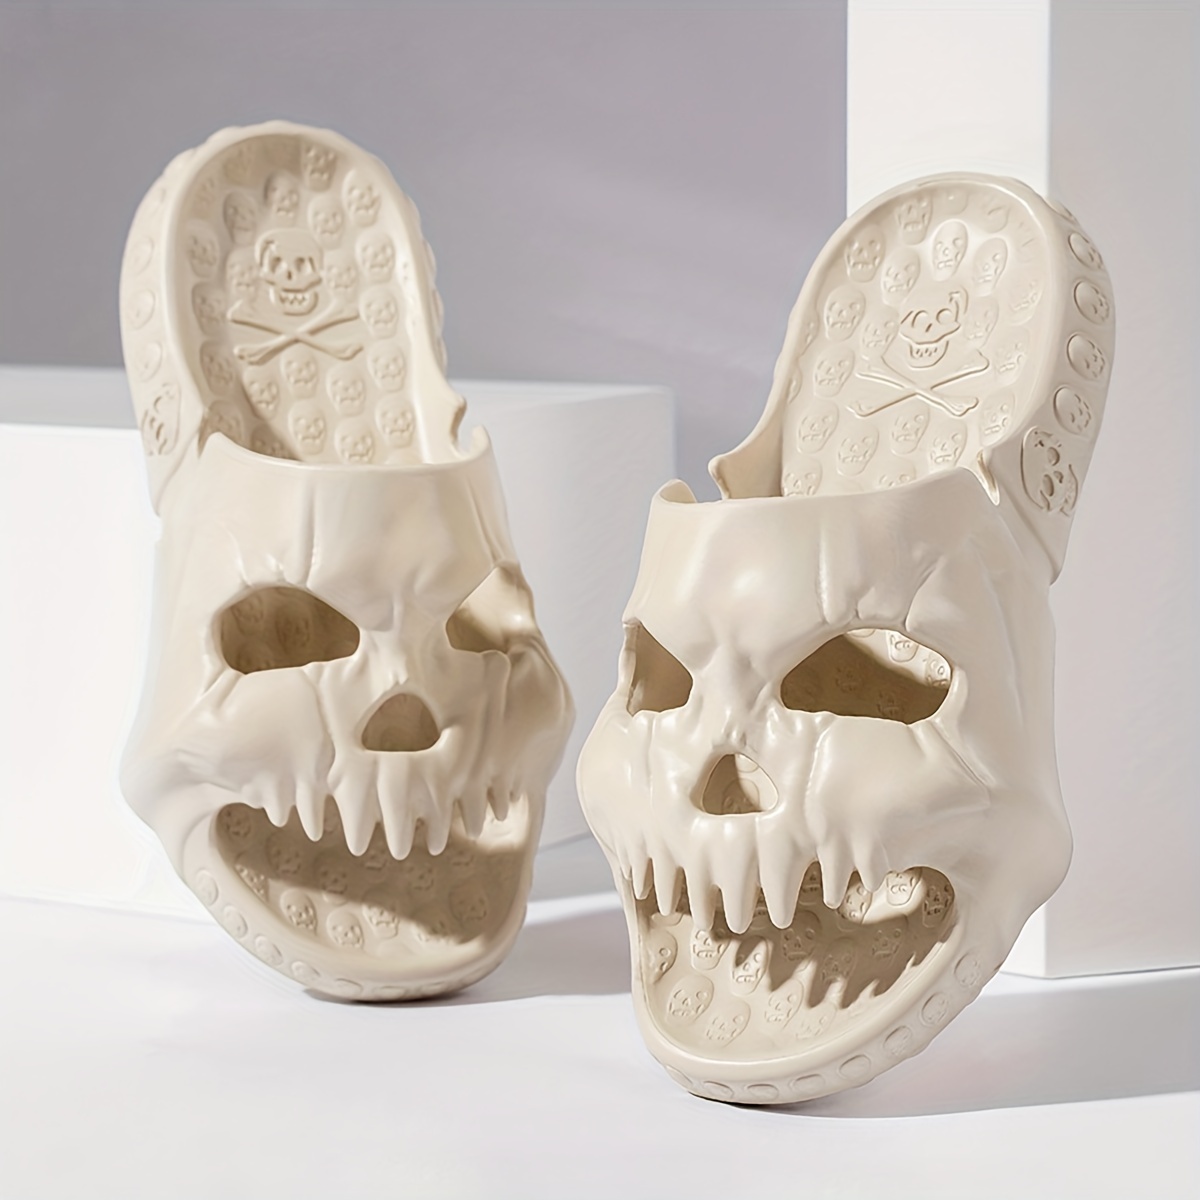 Women's Funny Skull Design Slide Shoes, Creative Halloween Pattern